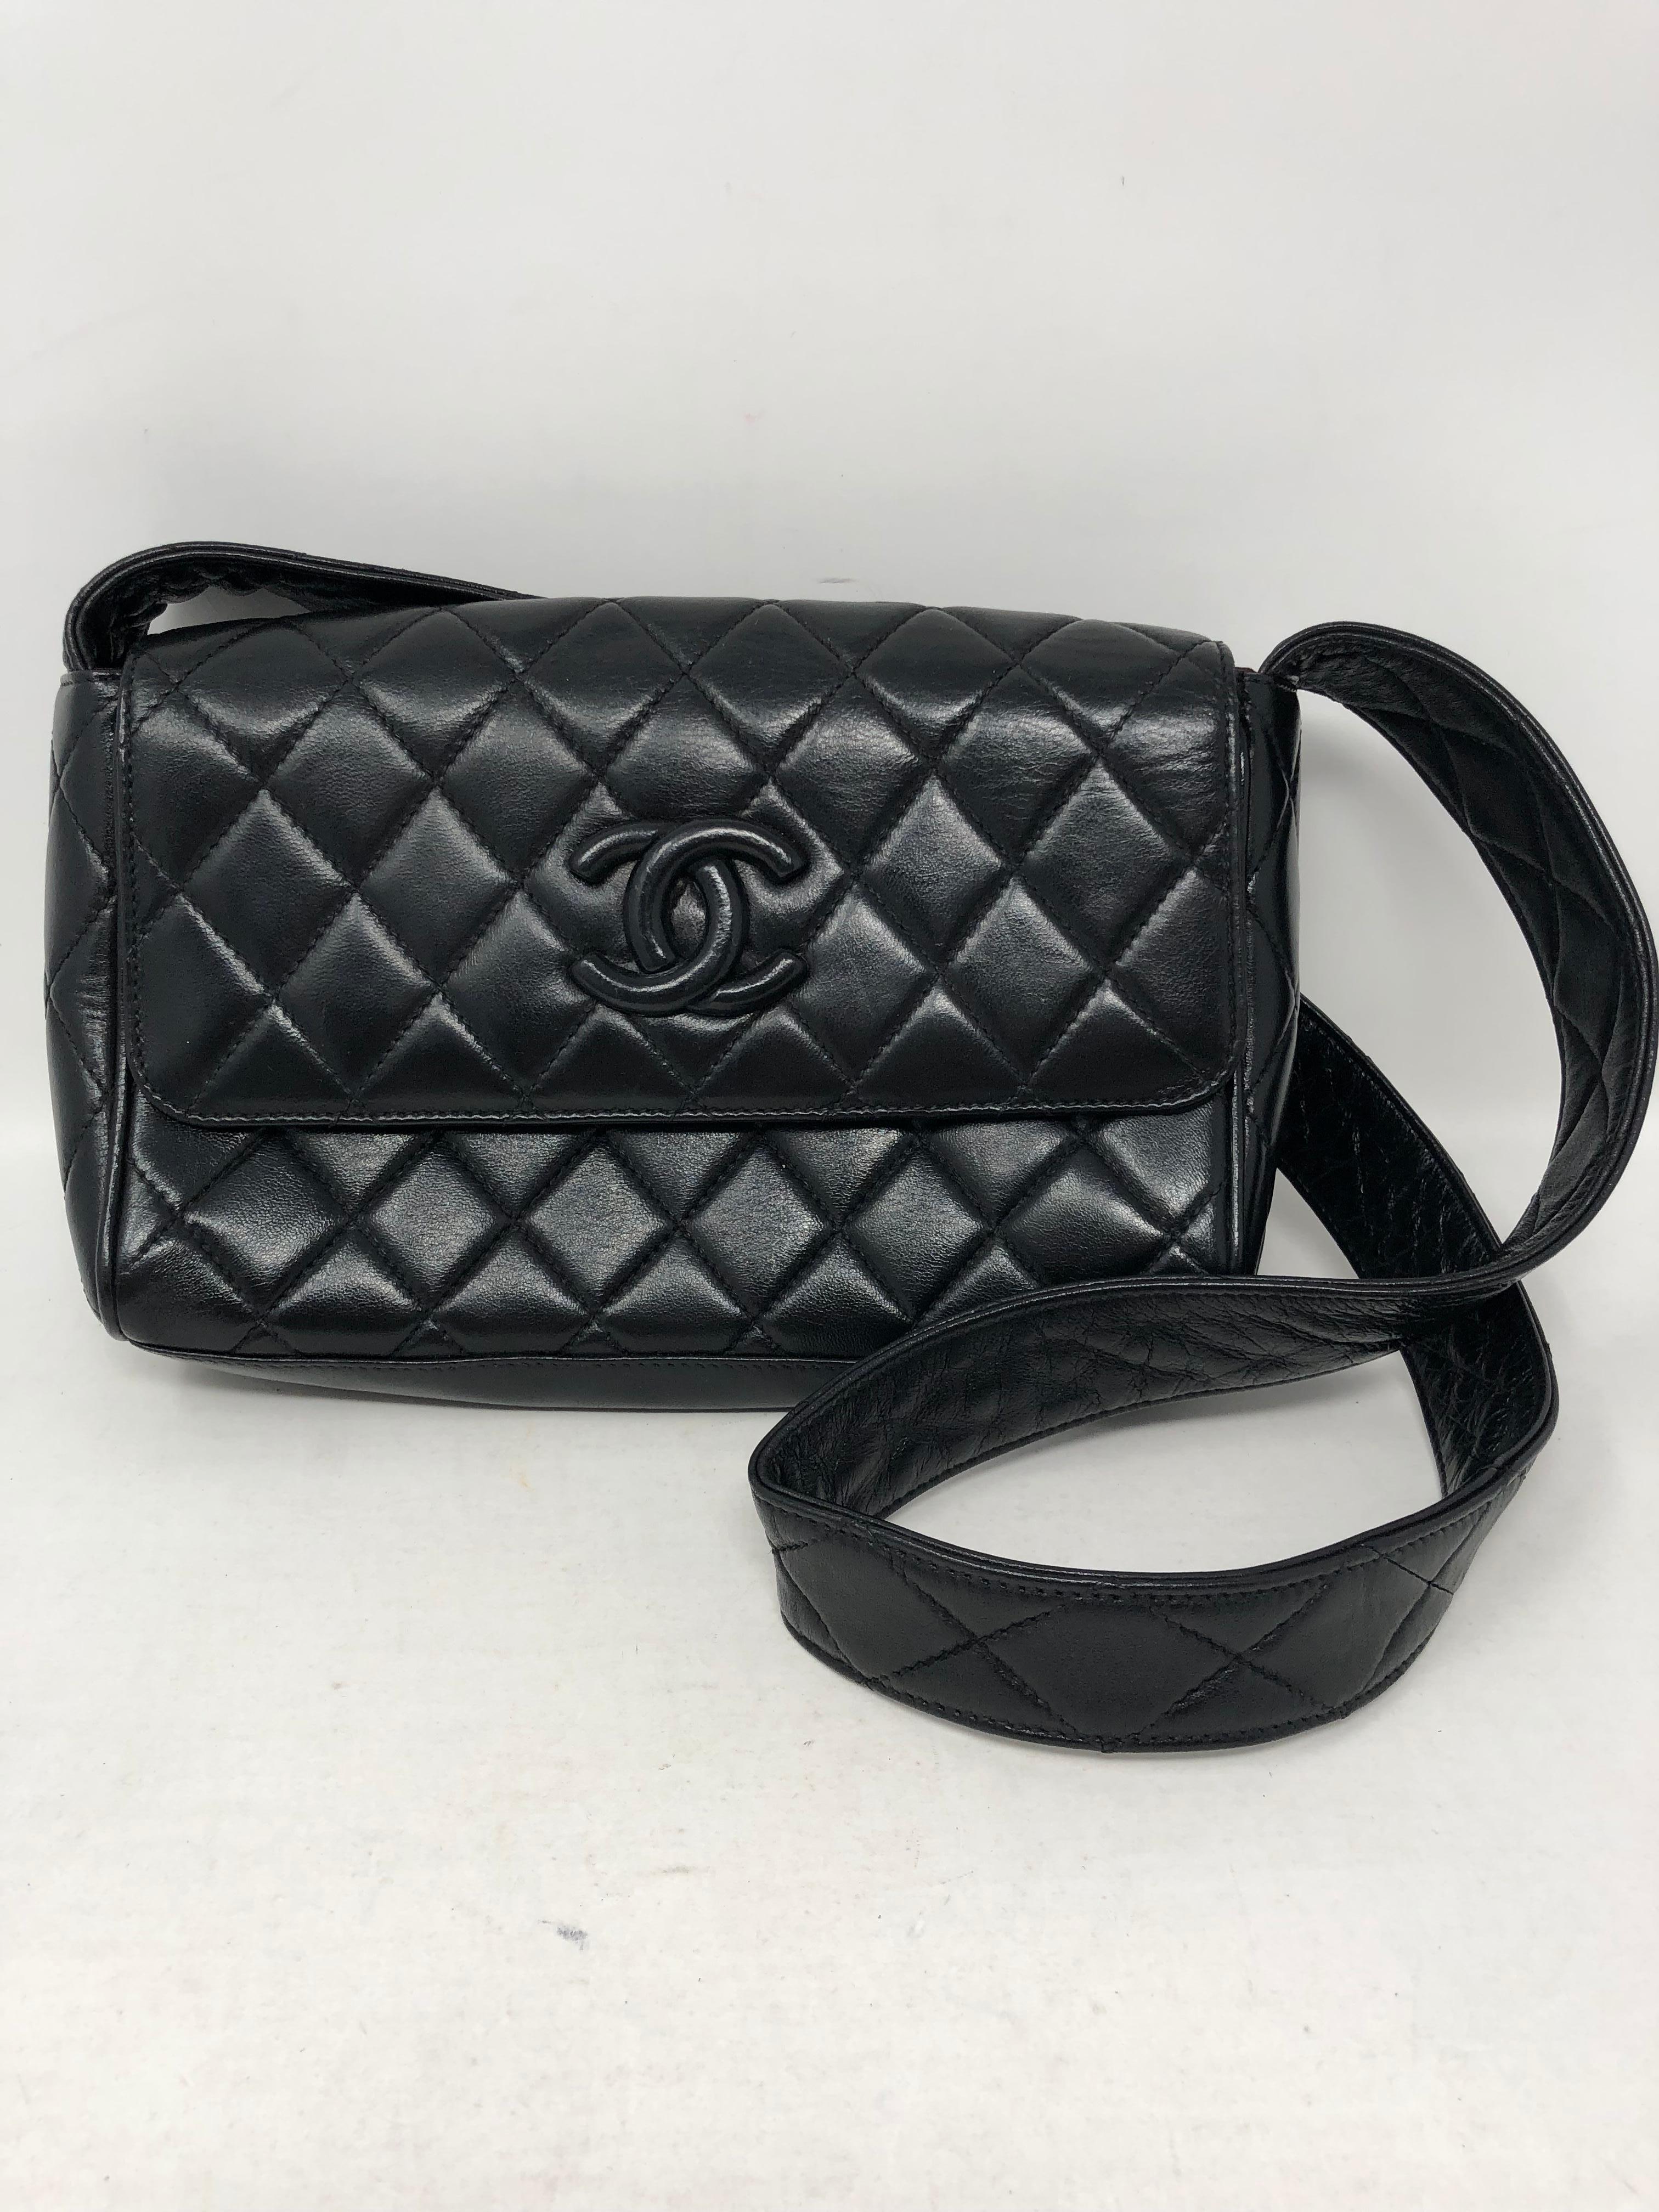 Women's or Men's Chanel Black Leather Crossbody Bag